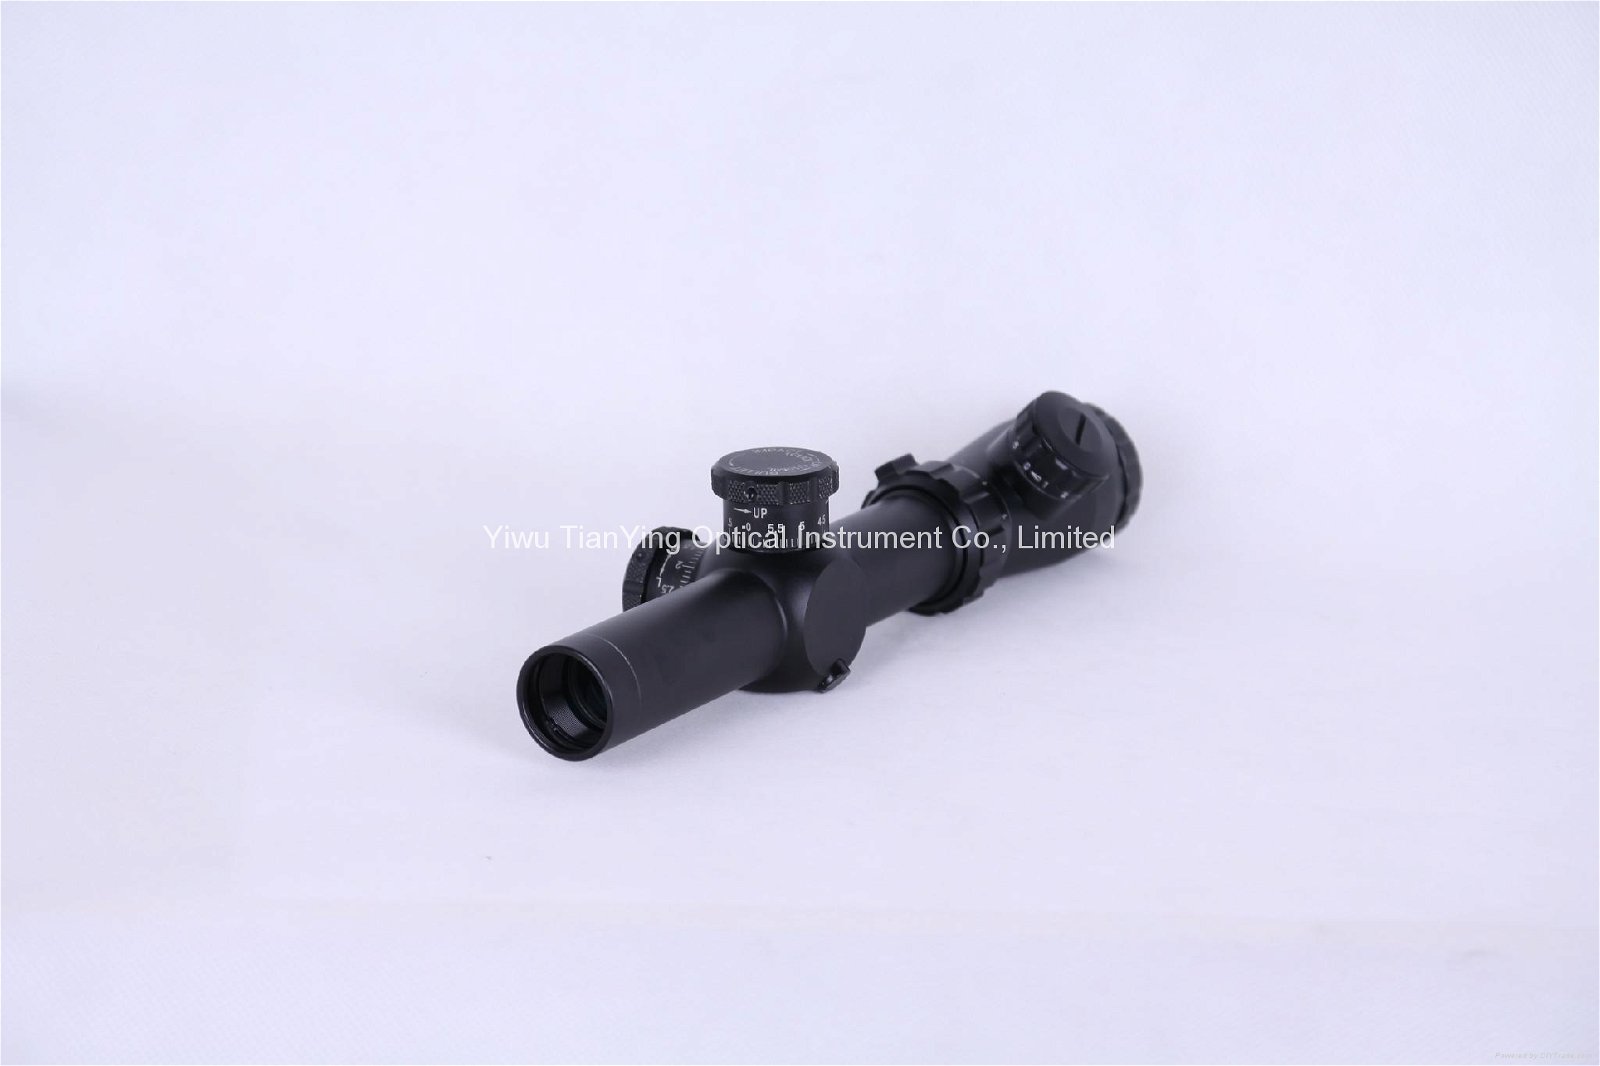 FT830 Fiber Optics Riflescope / Rifle Scope .223 Ballistic Reticle - M4/M16/AR15 4